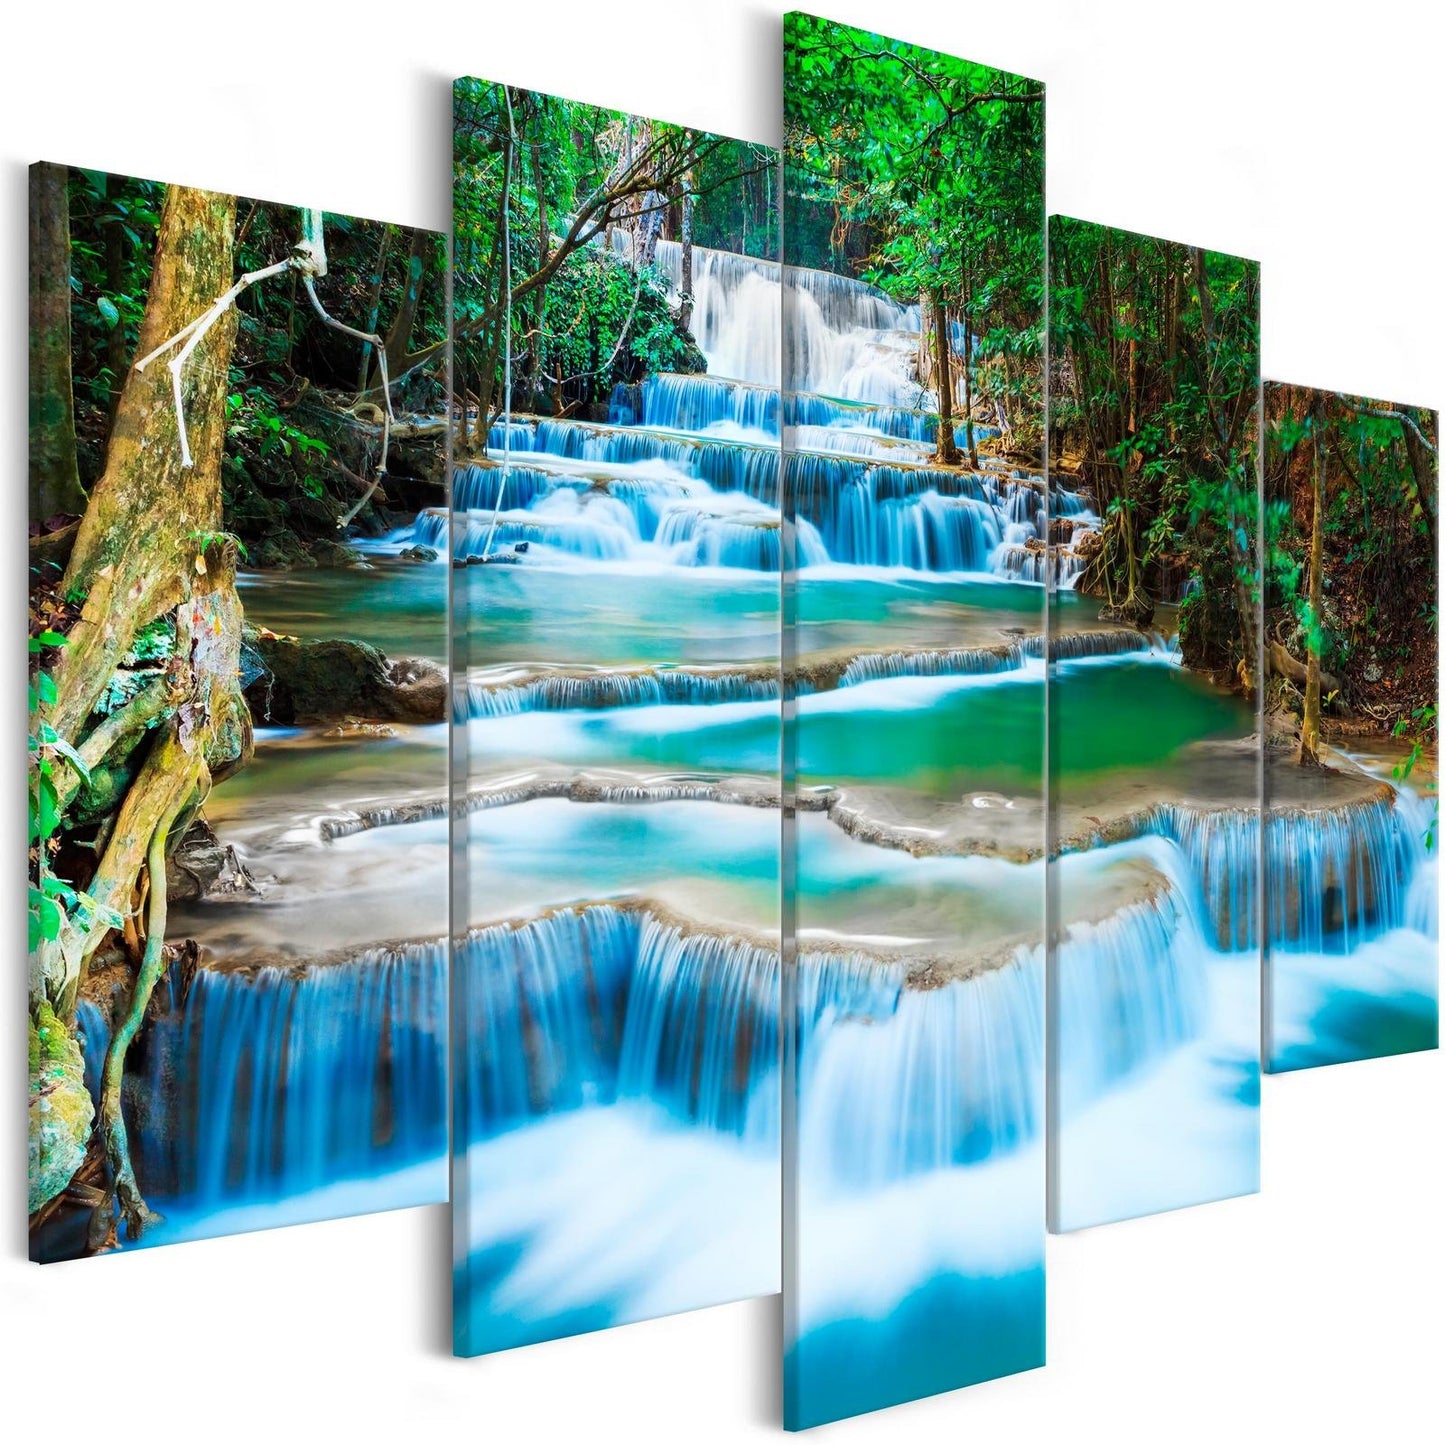 Painting - Waterfall in Kanchanaburi (5 Parts) Wide